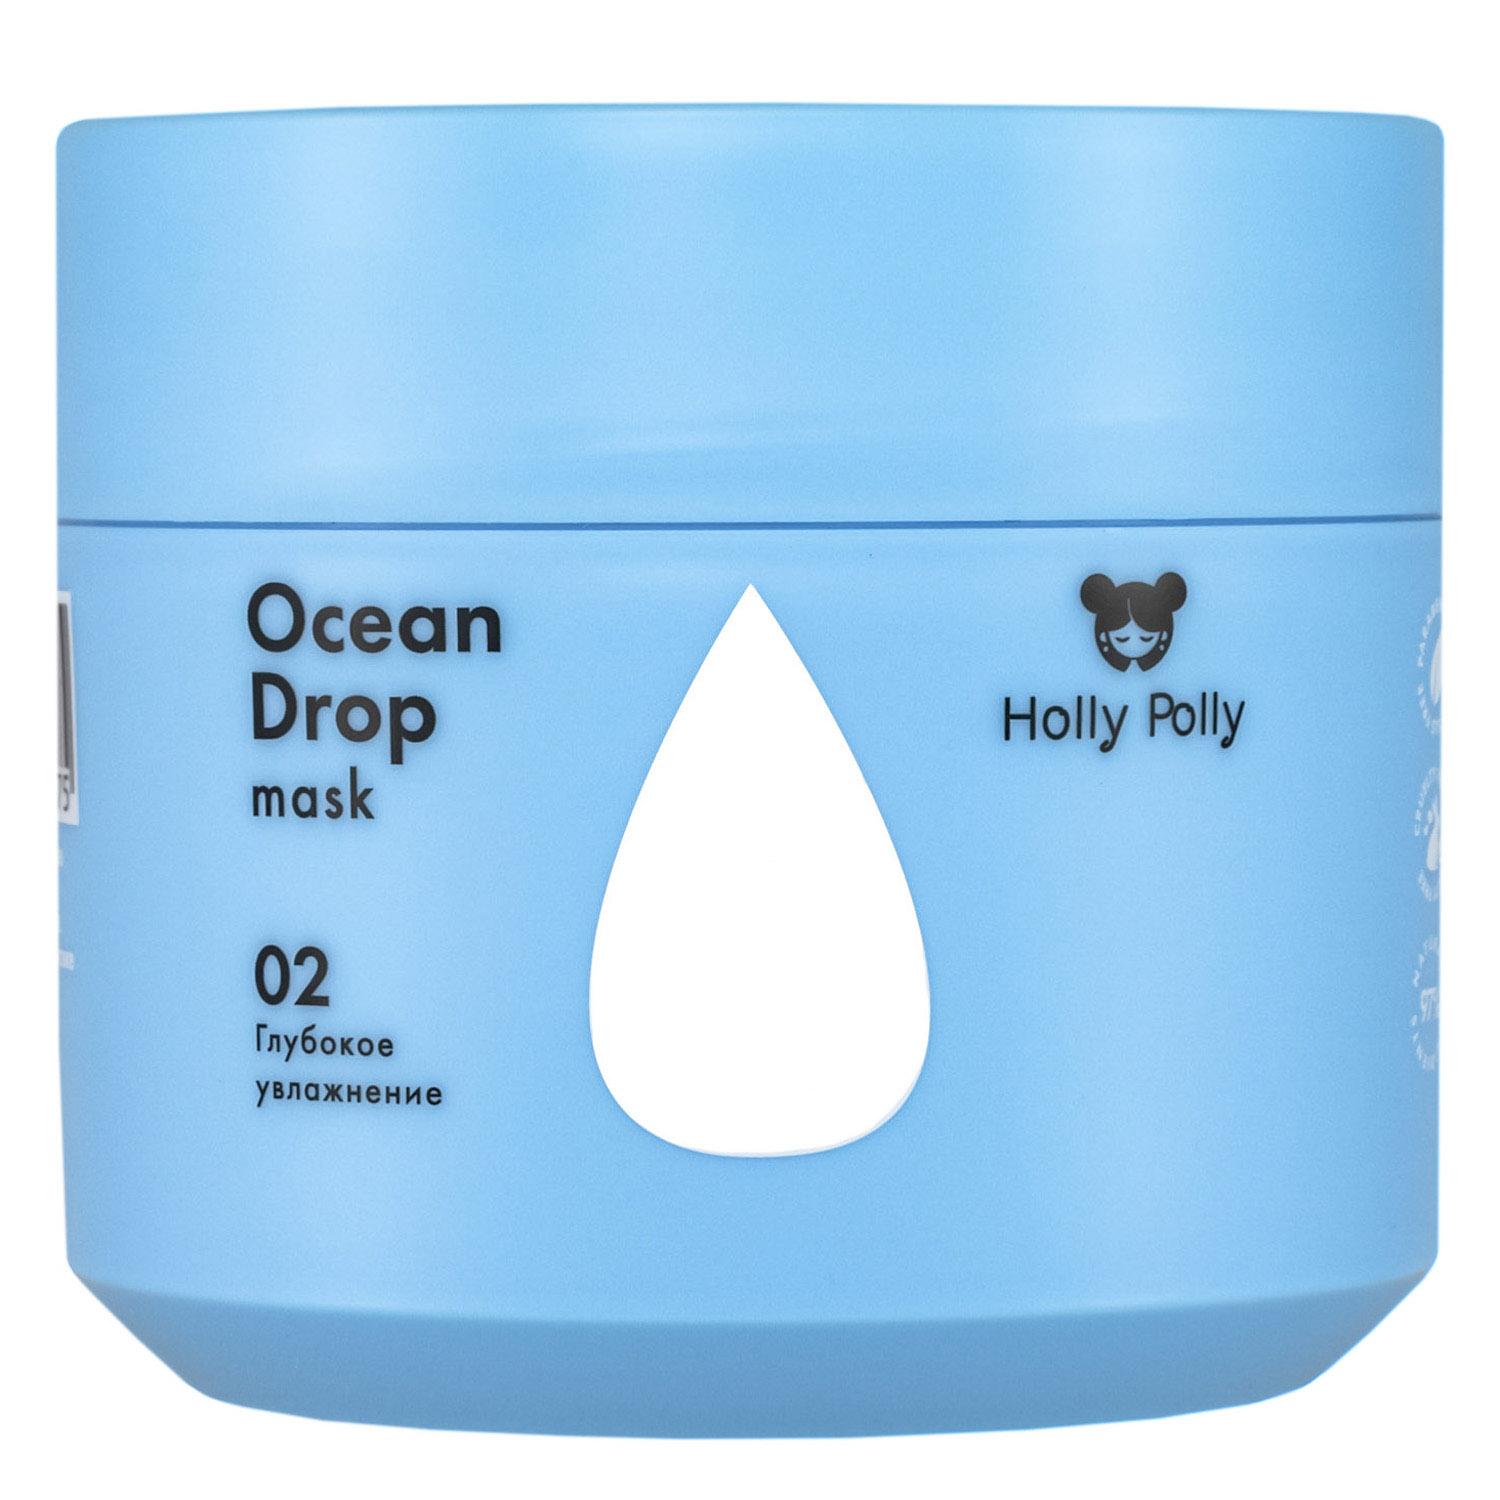 Holly Polly Увлажняющая маска, 300 мл (Holly Polly, Ocean Drop) маска для волос holly polly маска увлажняющая ocean drop